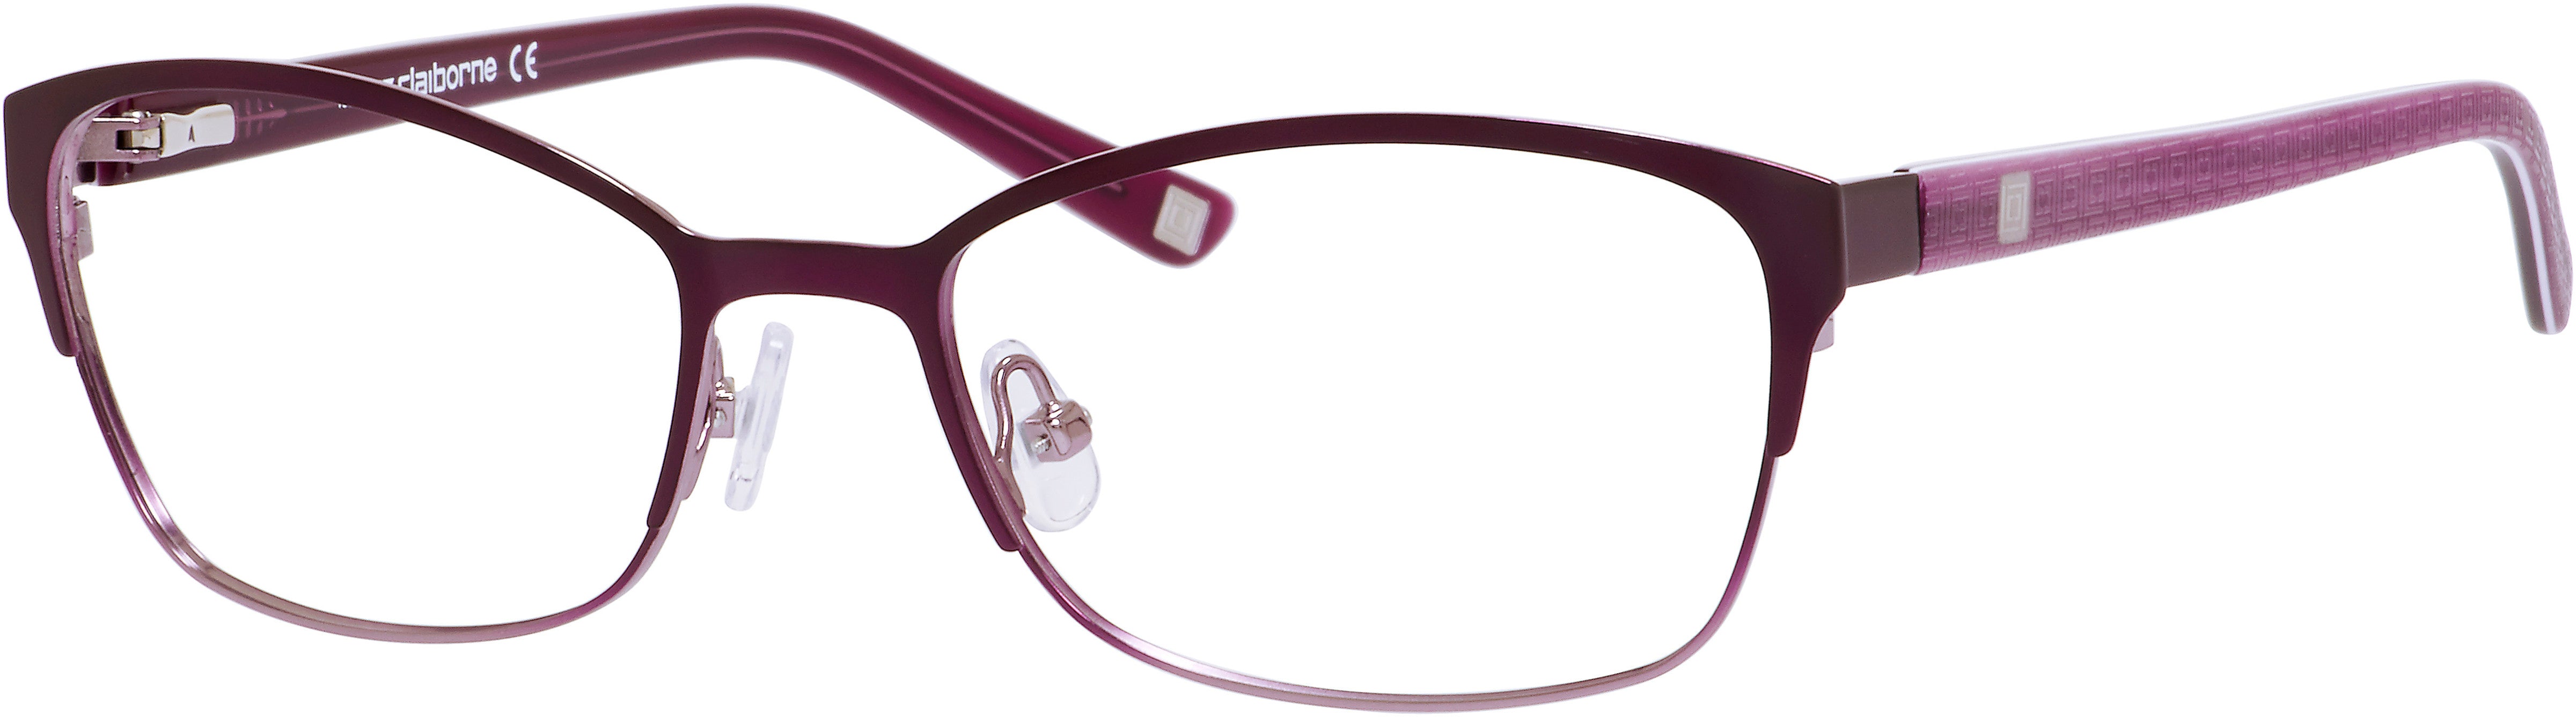  Liz Claiborne 605 Rectangular Eyeglasses 0FS7-0FS7  Plum Fade (00 Demo Lens)